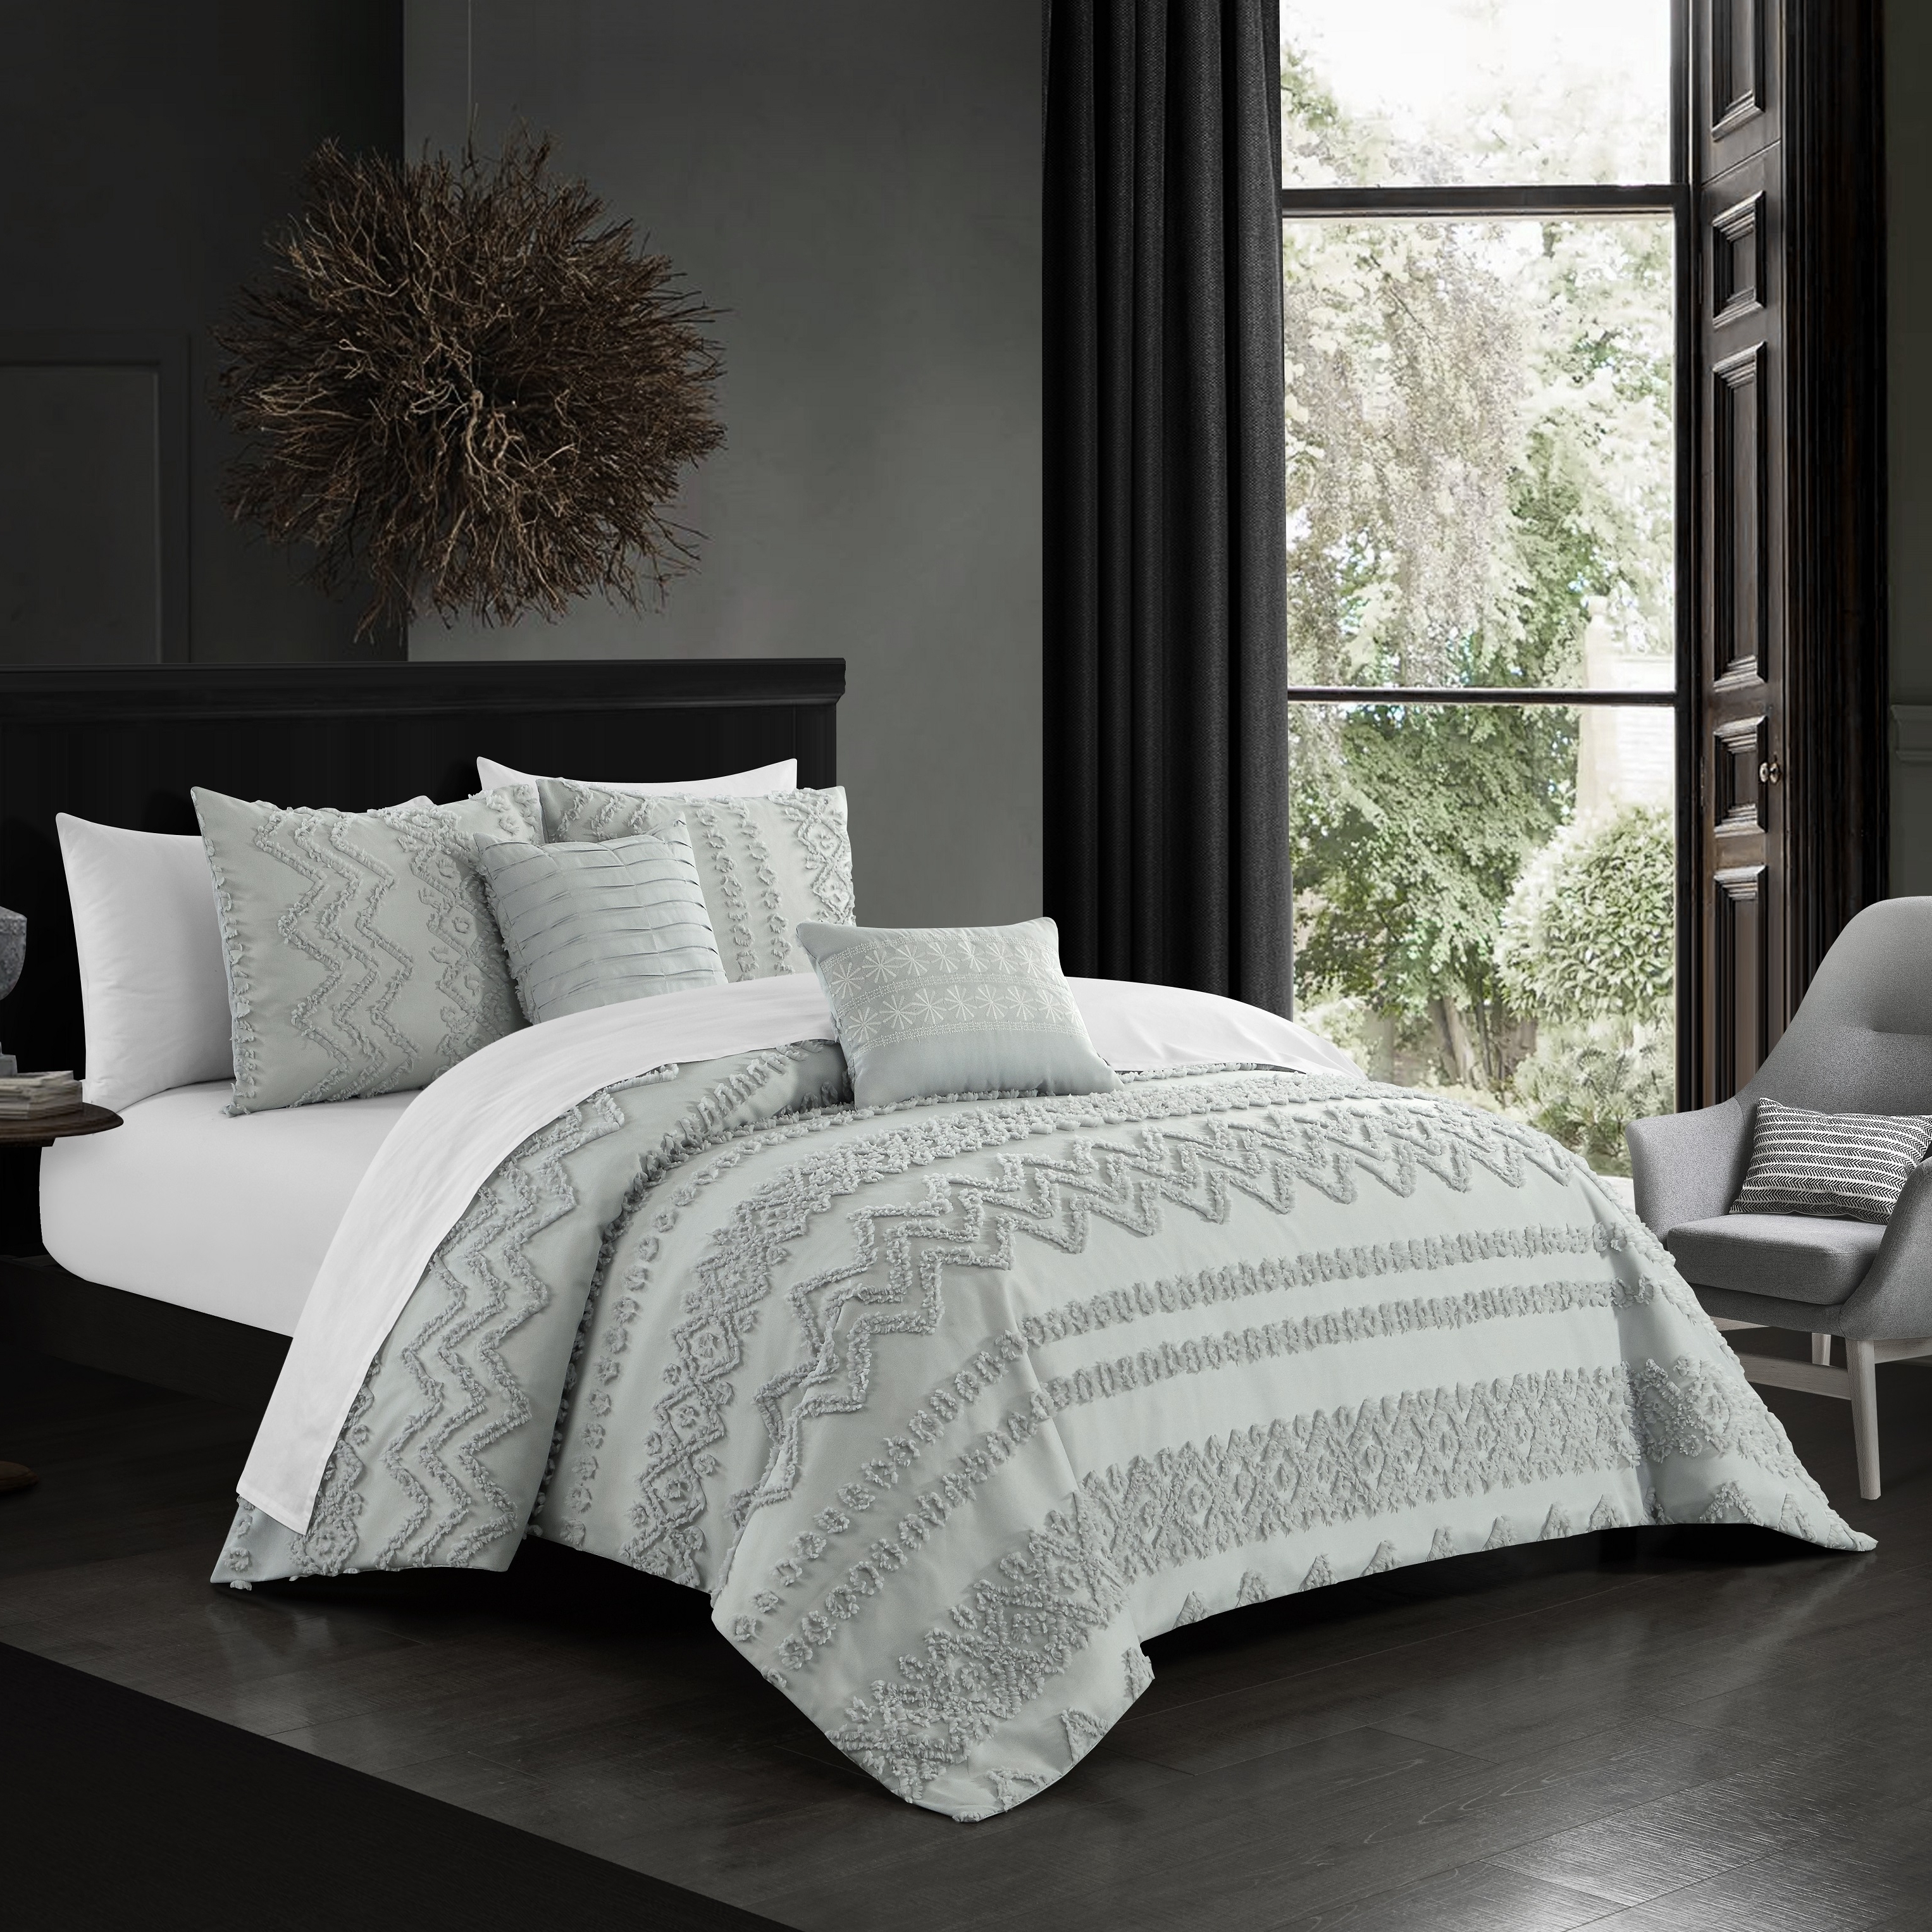 Jenson 5 Piece Comforter Set Jacquard Chevron Geometric Pattern Design Bedding - Grey, King